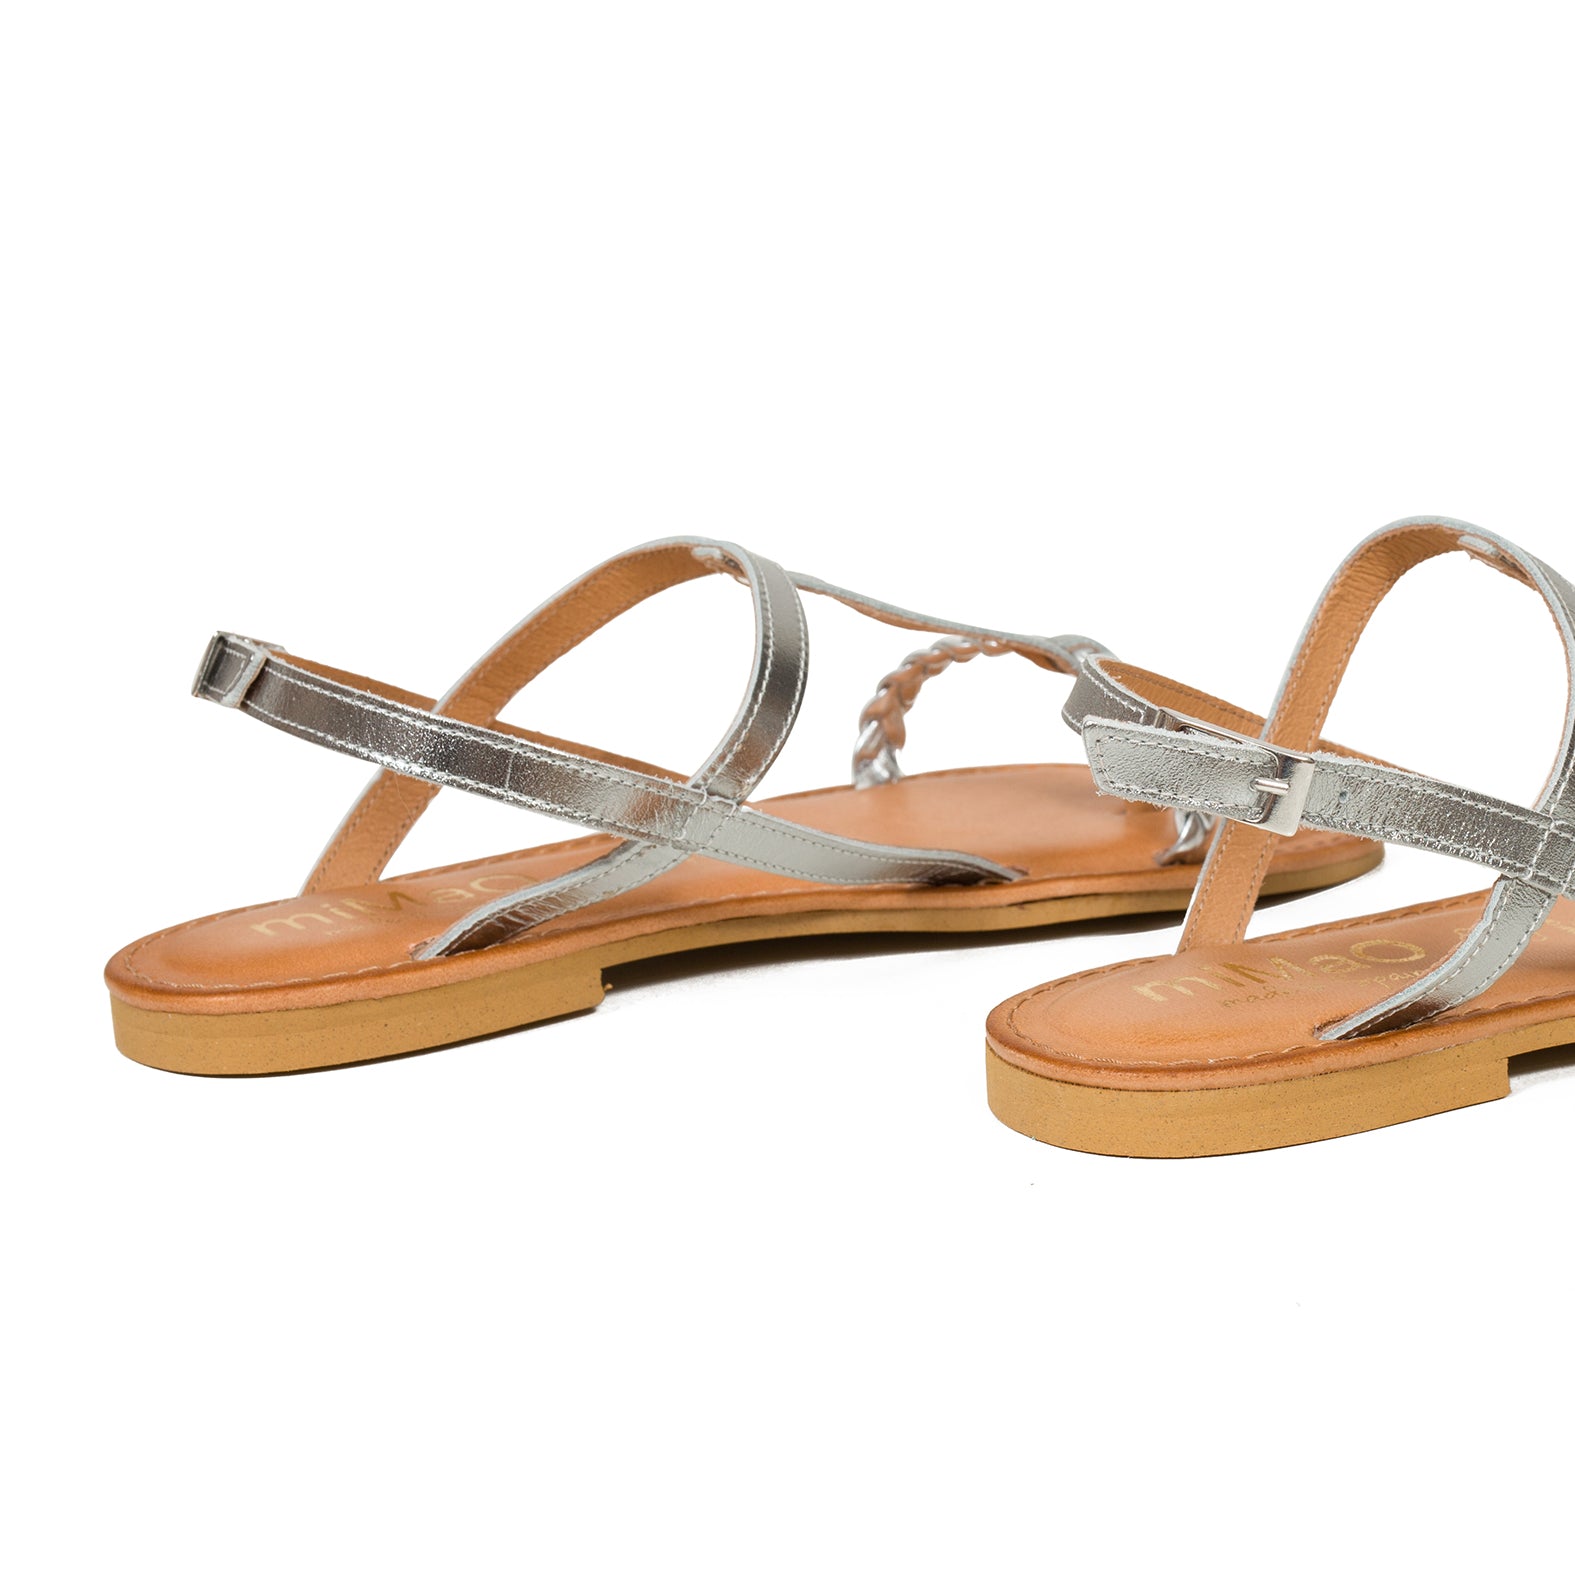 Sandalia plana de tiras con trenza | Comprar sandalias online ShopOnline